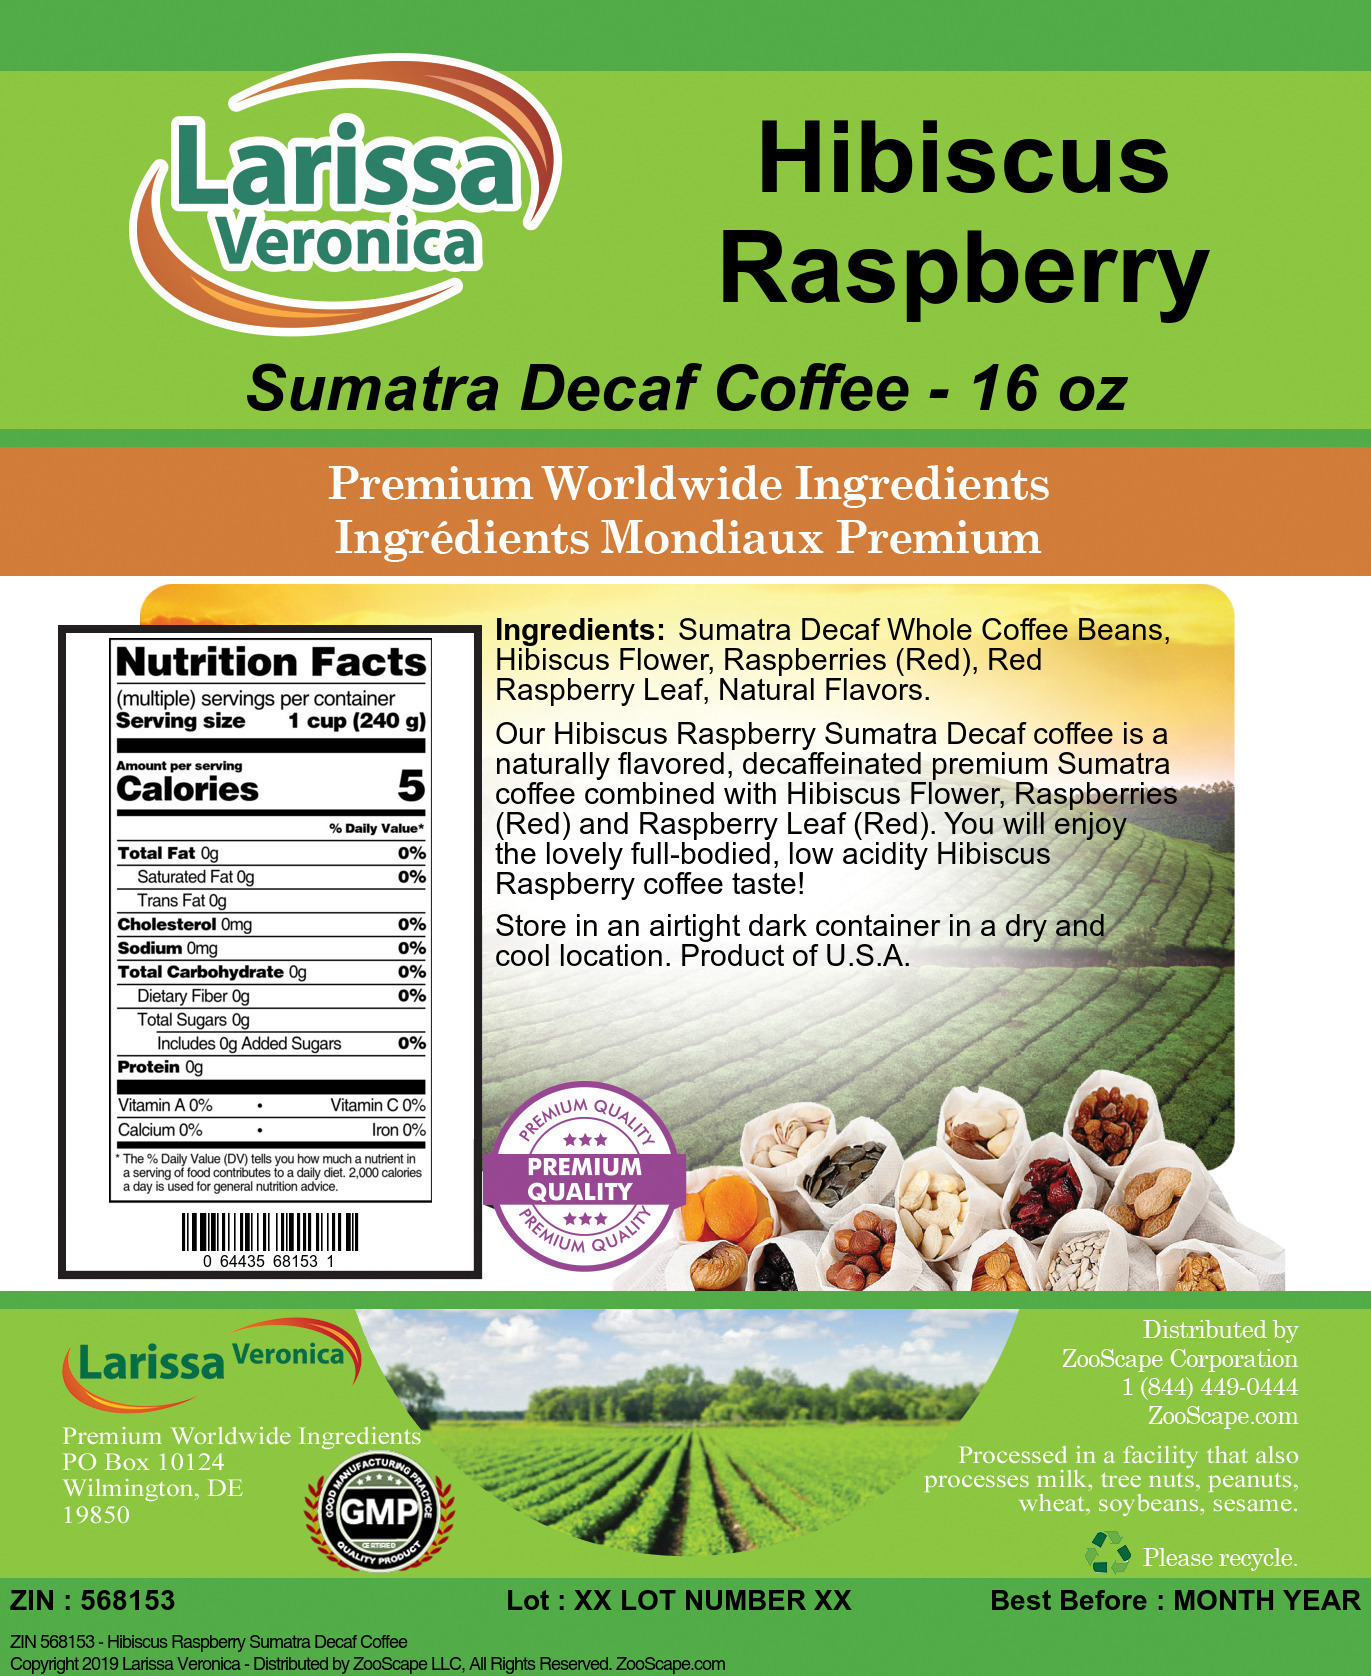 Hibiscus Raspberry Sumatra Decaf Coffee - Label